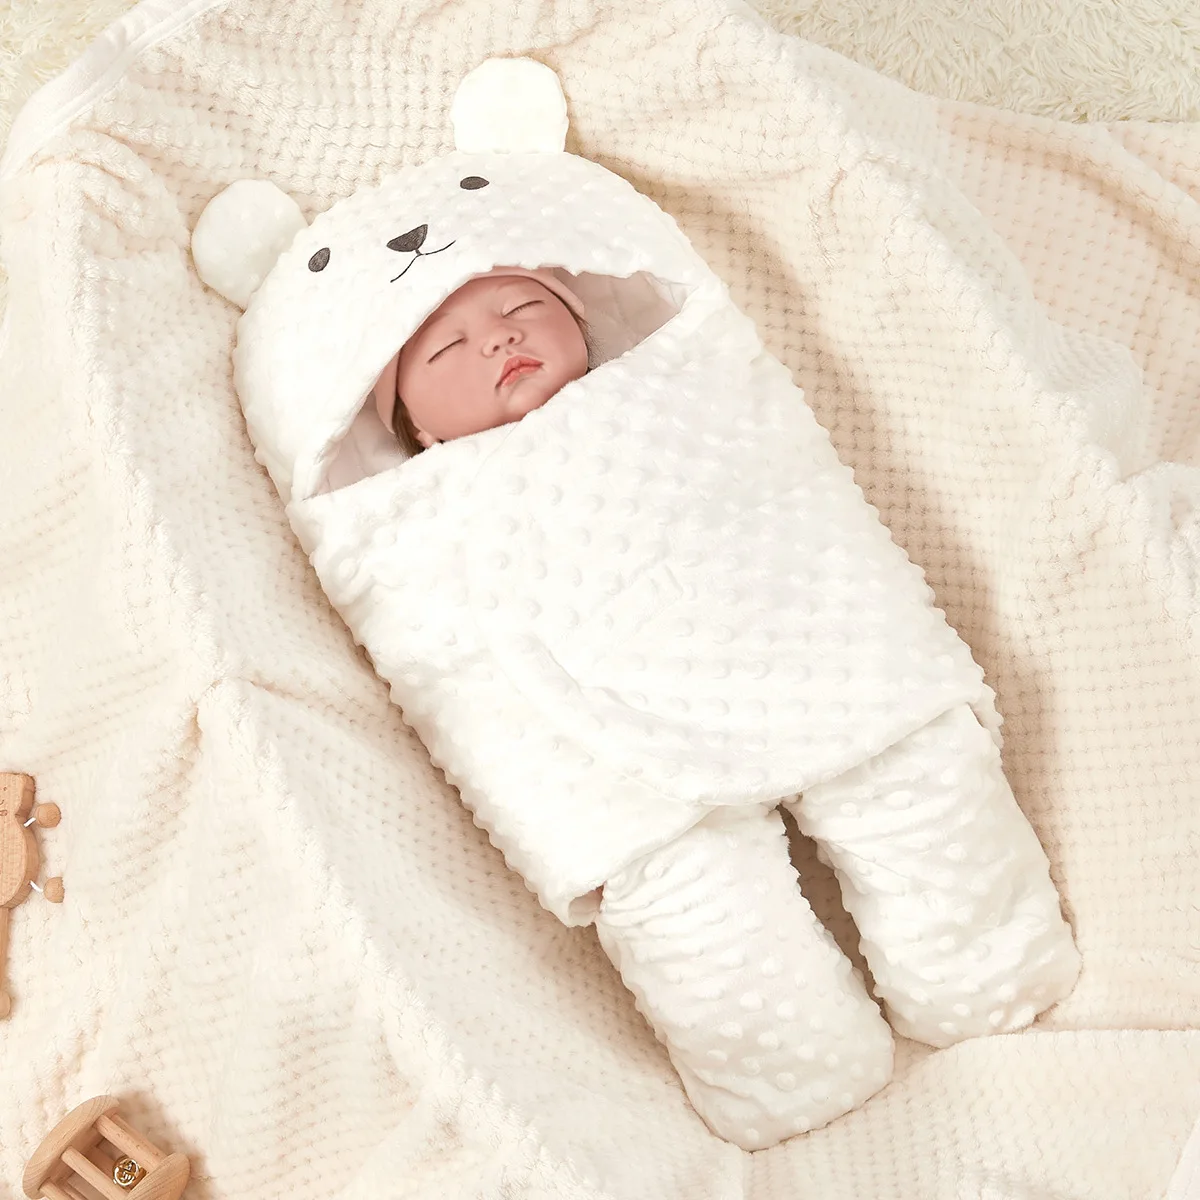 Manta de forro polar Doudou de dibujos animados para bebé recién nacido, saco de dormir, artículos de cama cálidos, accesorios para bebé